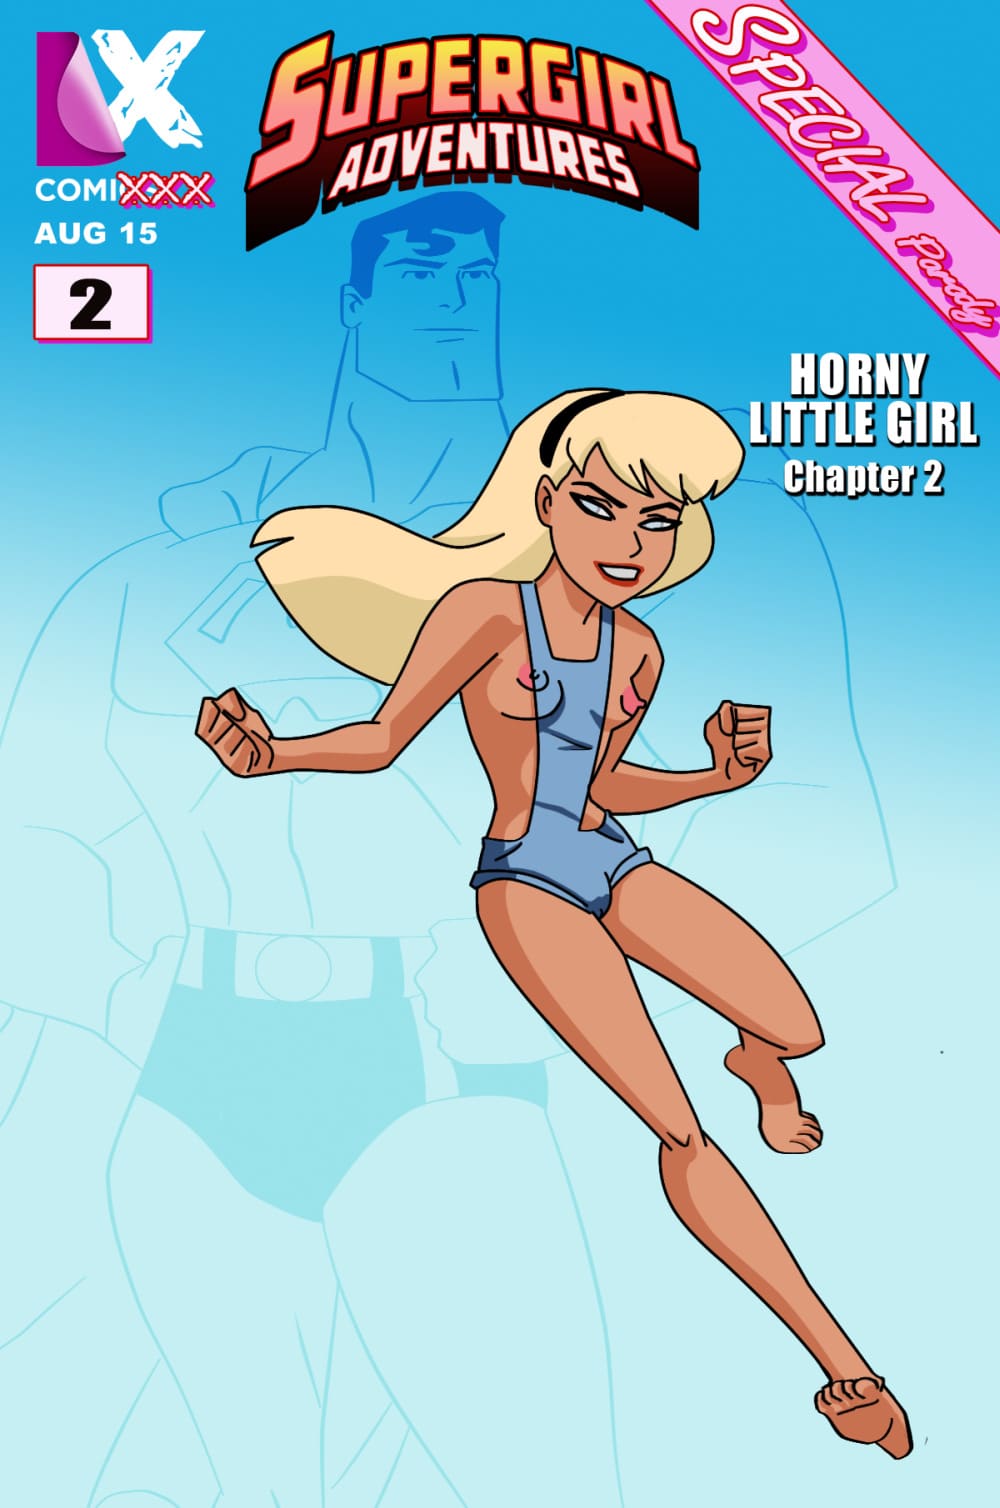 Supergirl Adventures Horny Little Girl